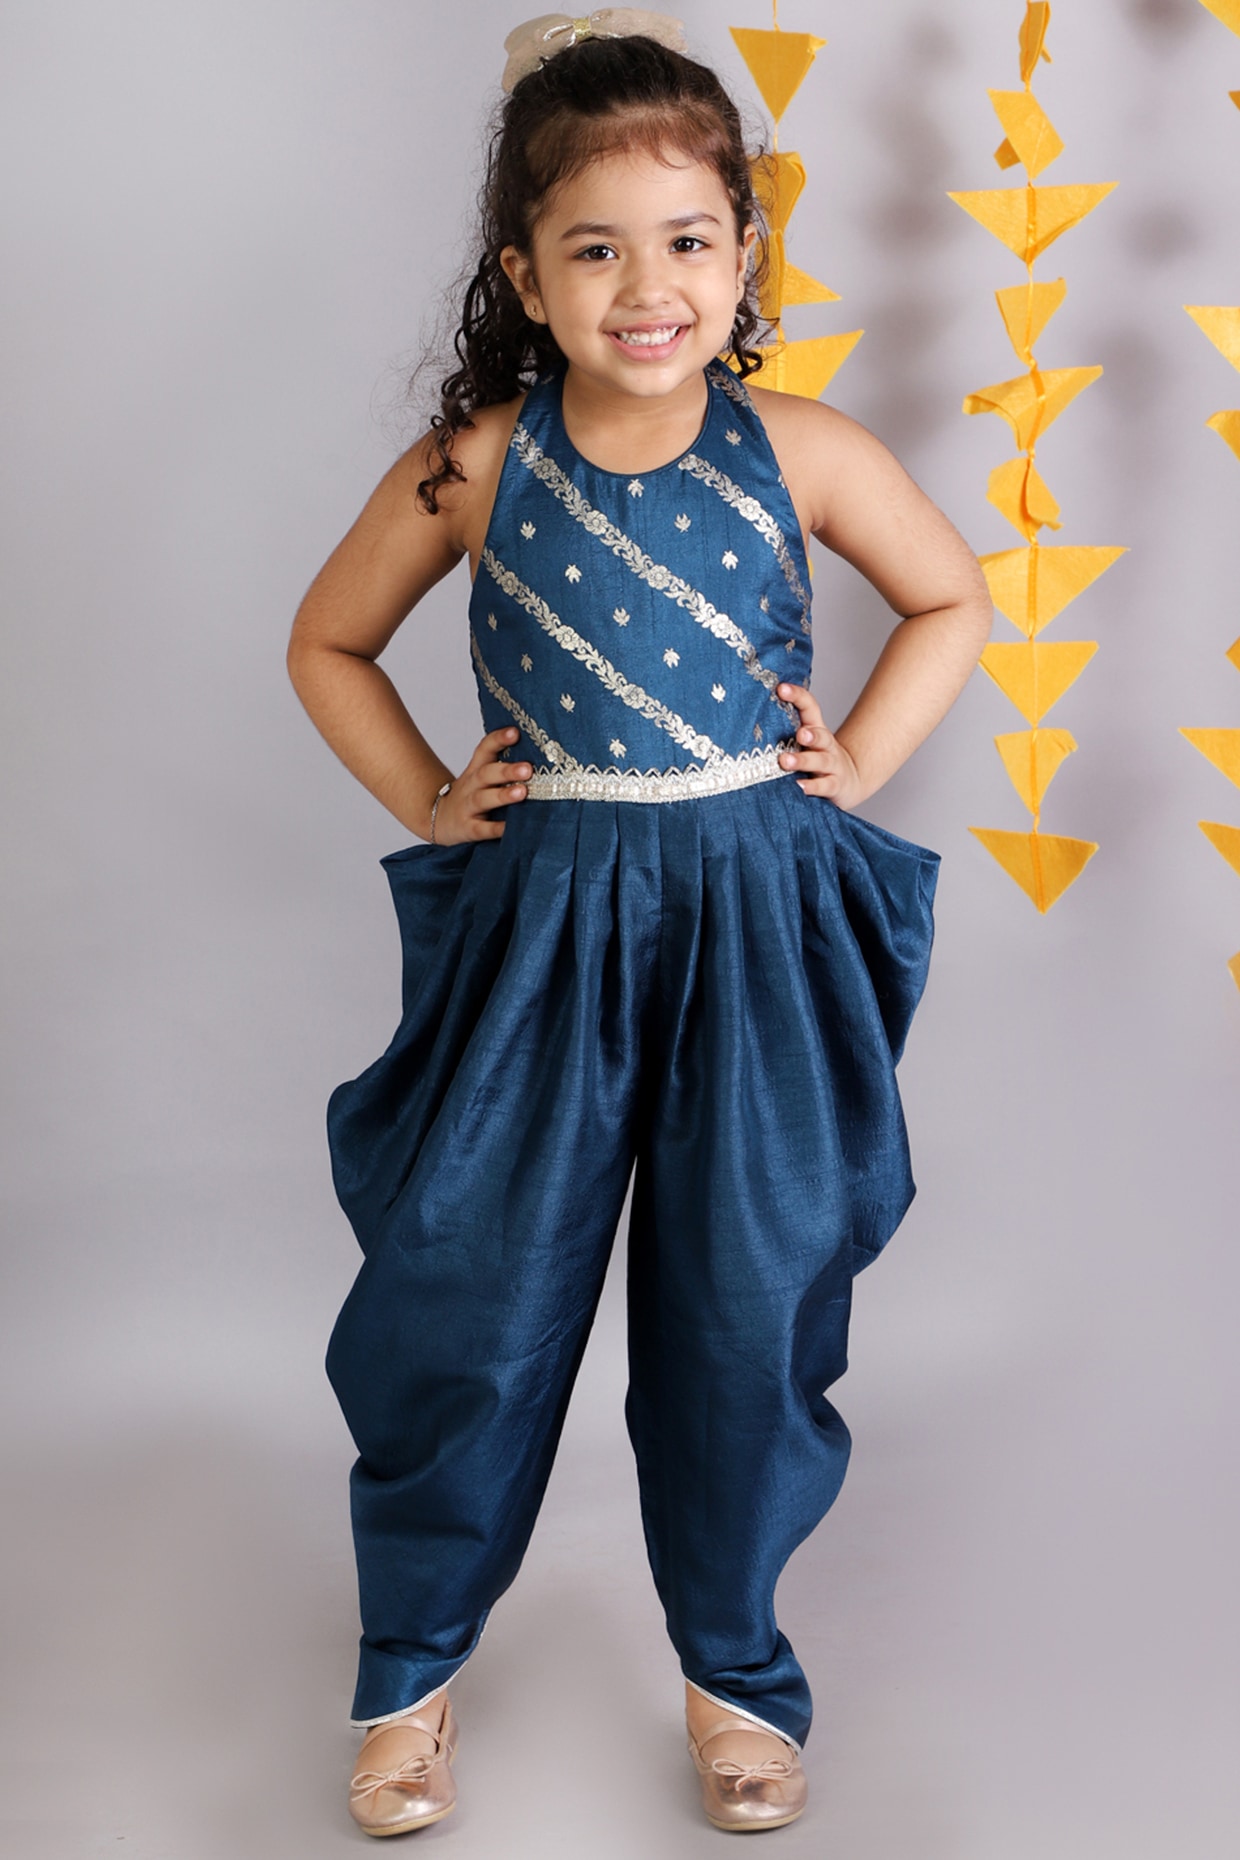 Fabulous Black Cotton Blend Self Pattern Basic Jumpsuit For Baby Girls - 7-8  Years, किड्स जम्पसूट - Instaecart Solution, Gyanpur | ID: 2850040442673